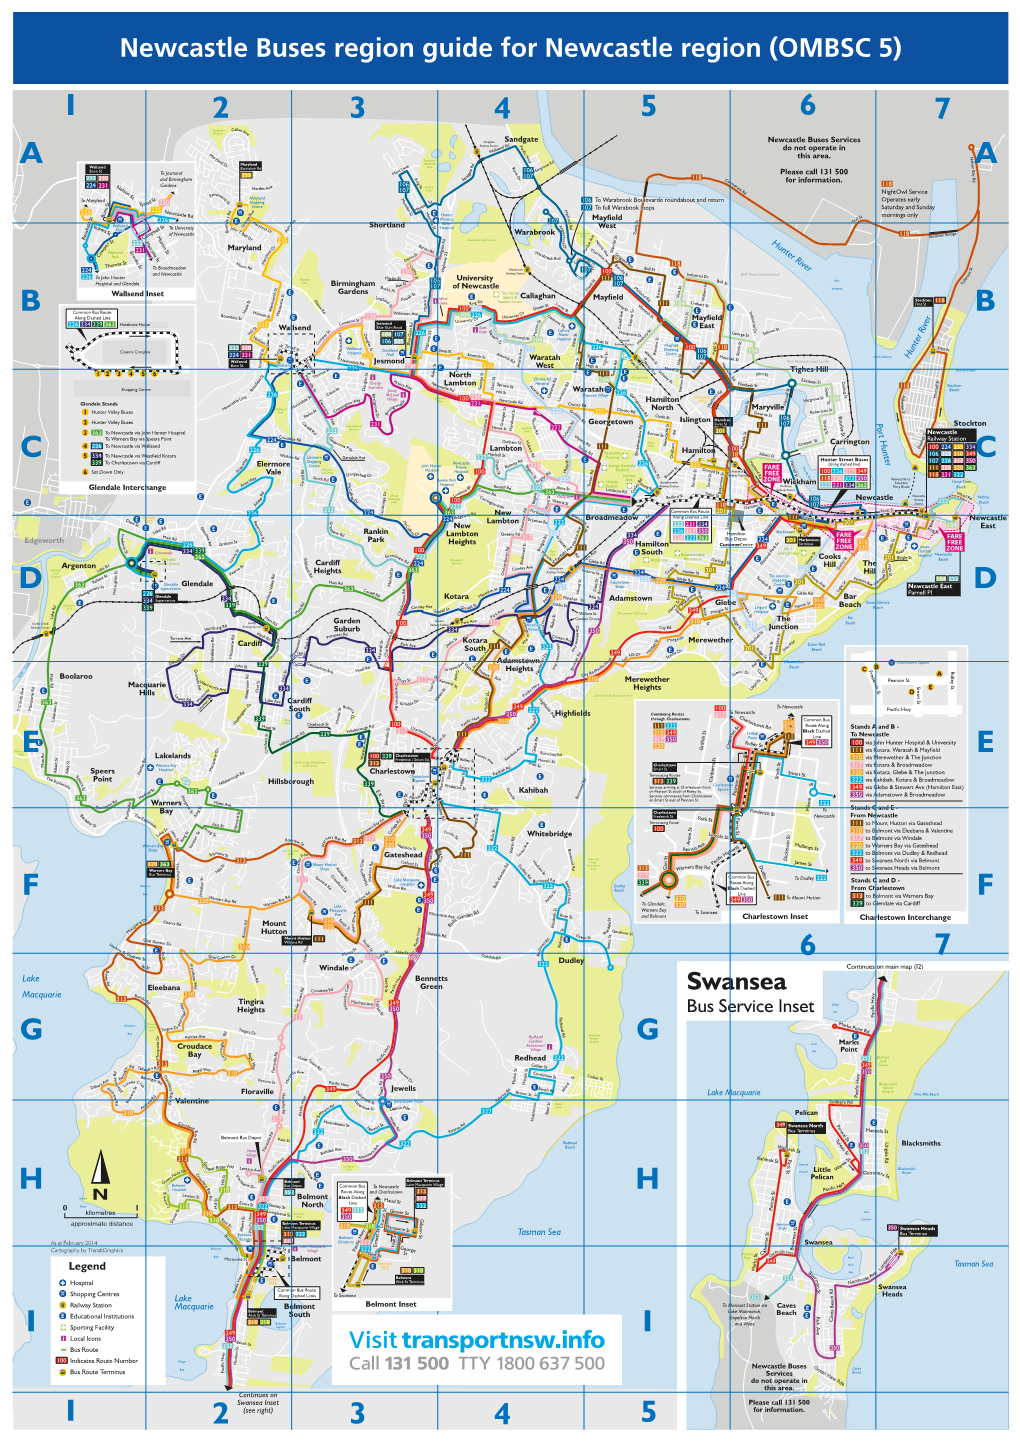 Newcastle Buses Region Guide for Newcastle Region (OMBSC 5)